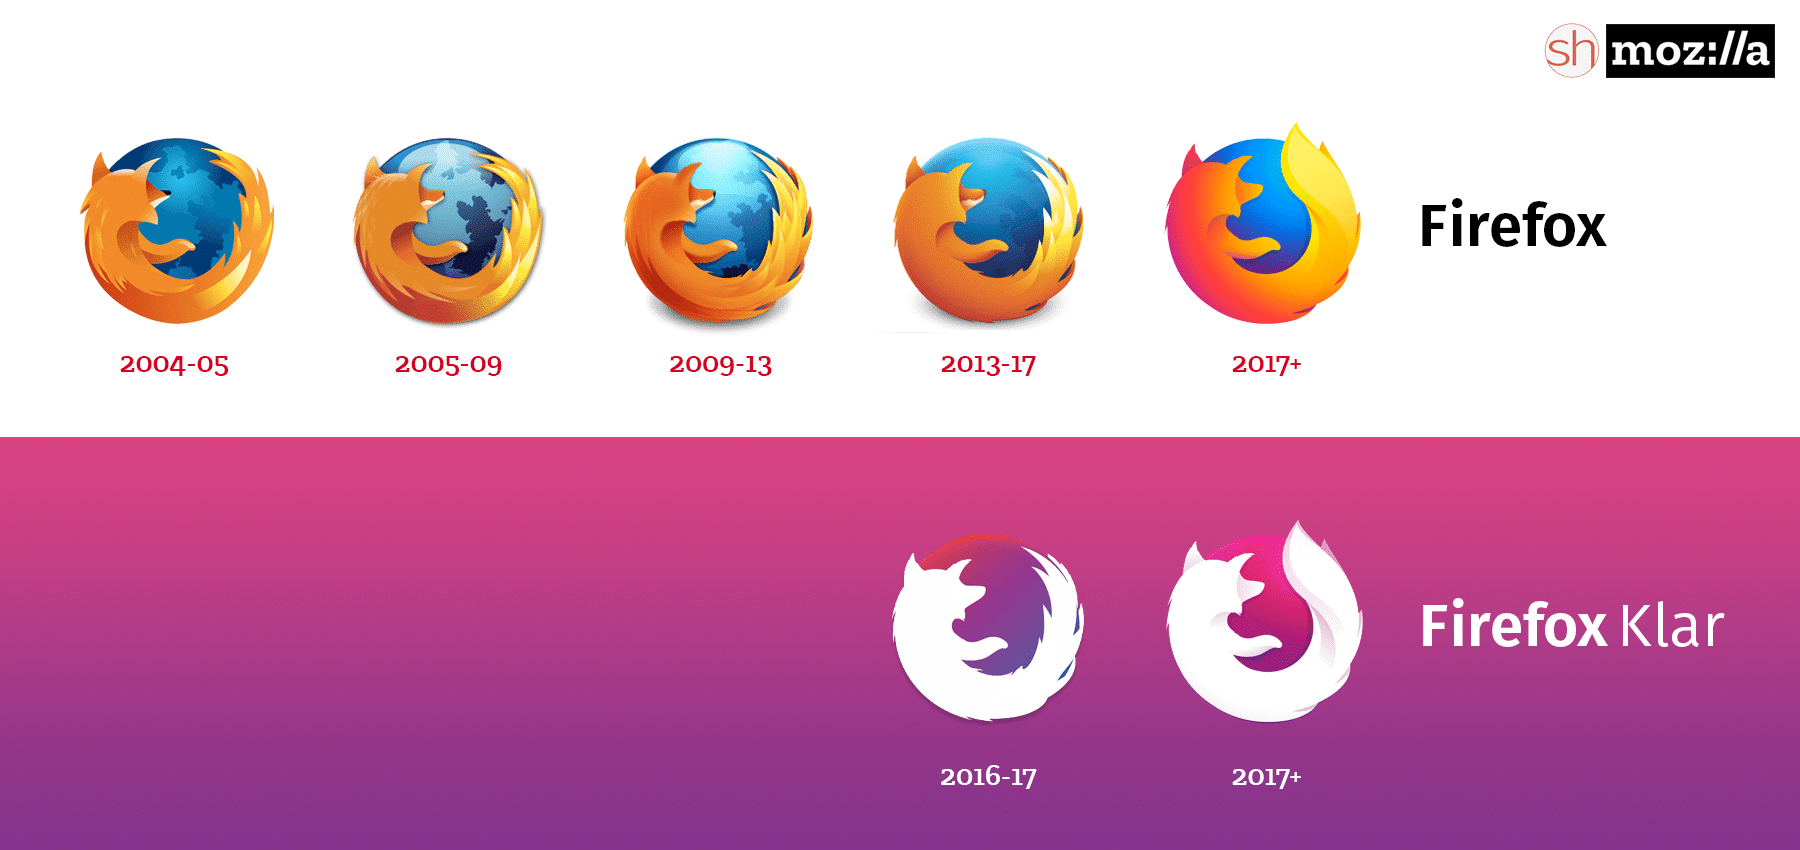 Google Firefox Logo - Update Firefox icon when Firefox 57 is released · Issue #301 ...